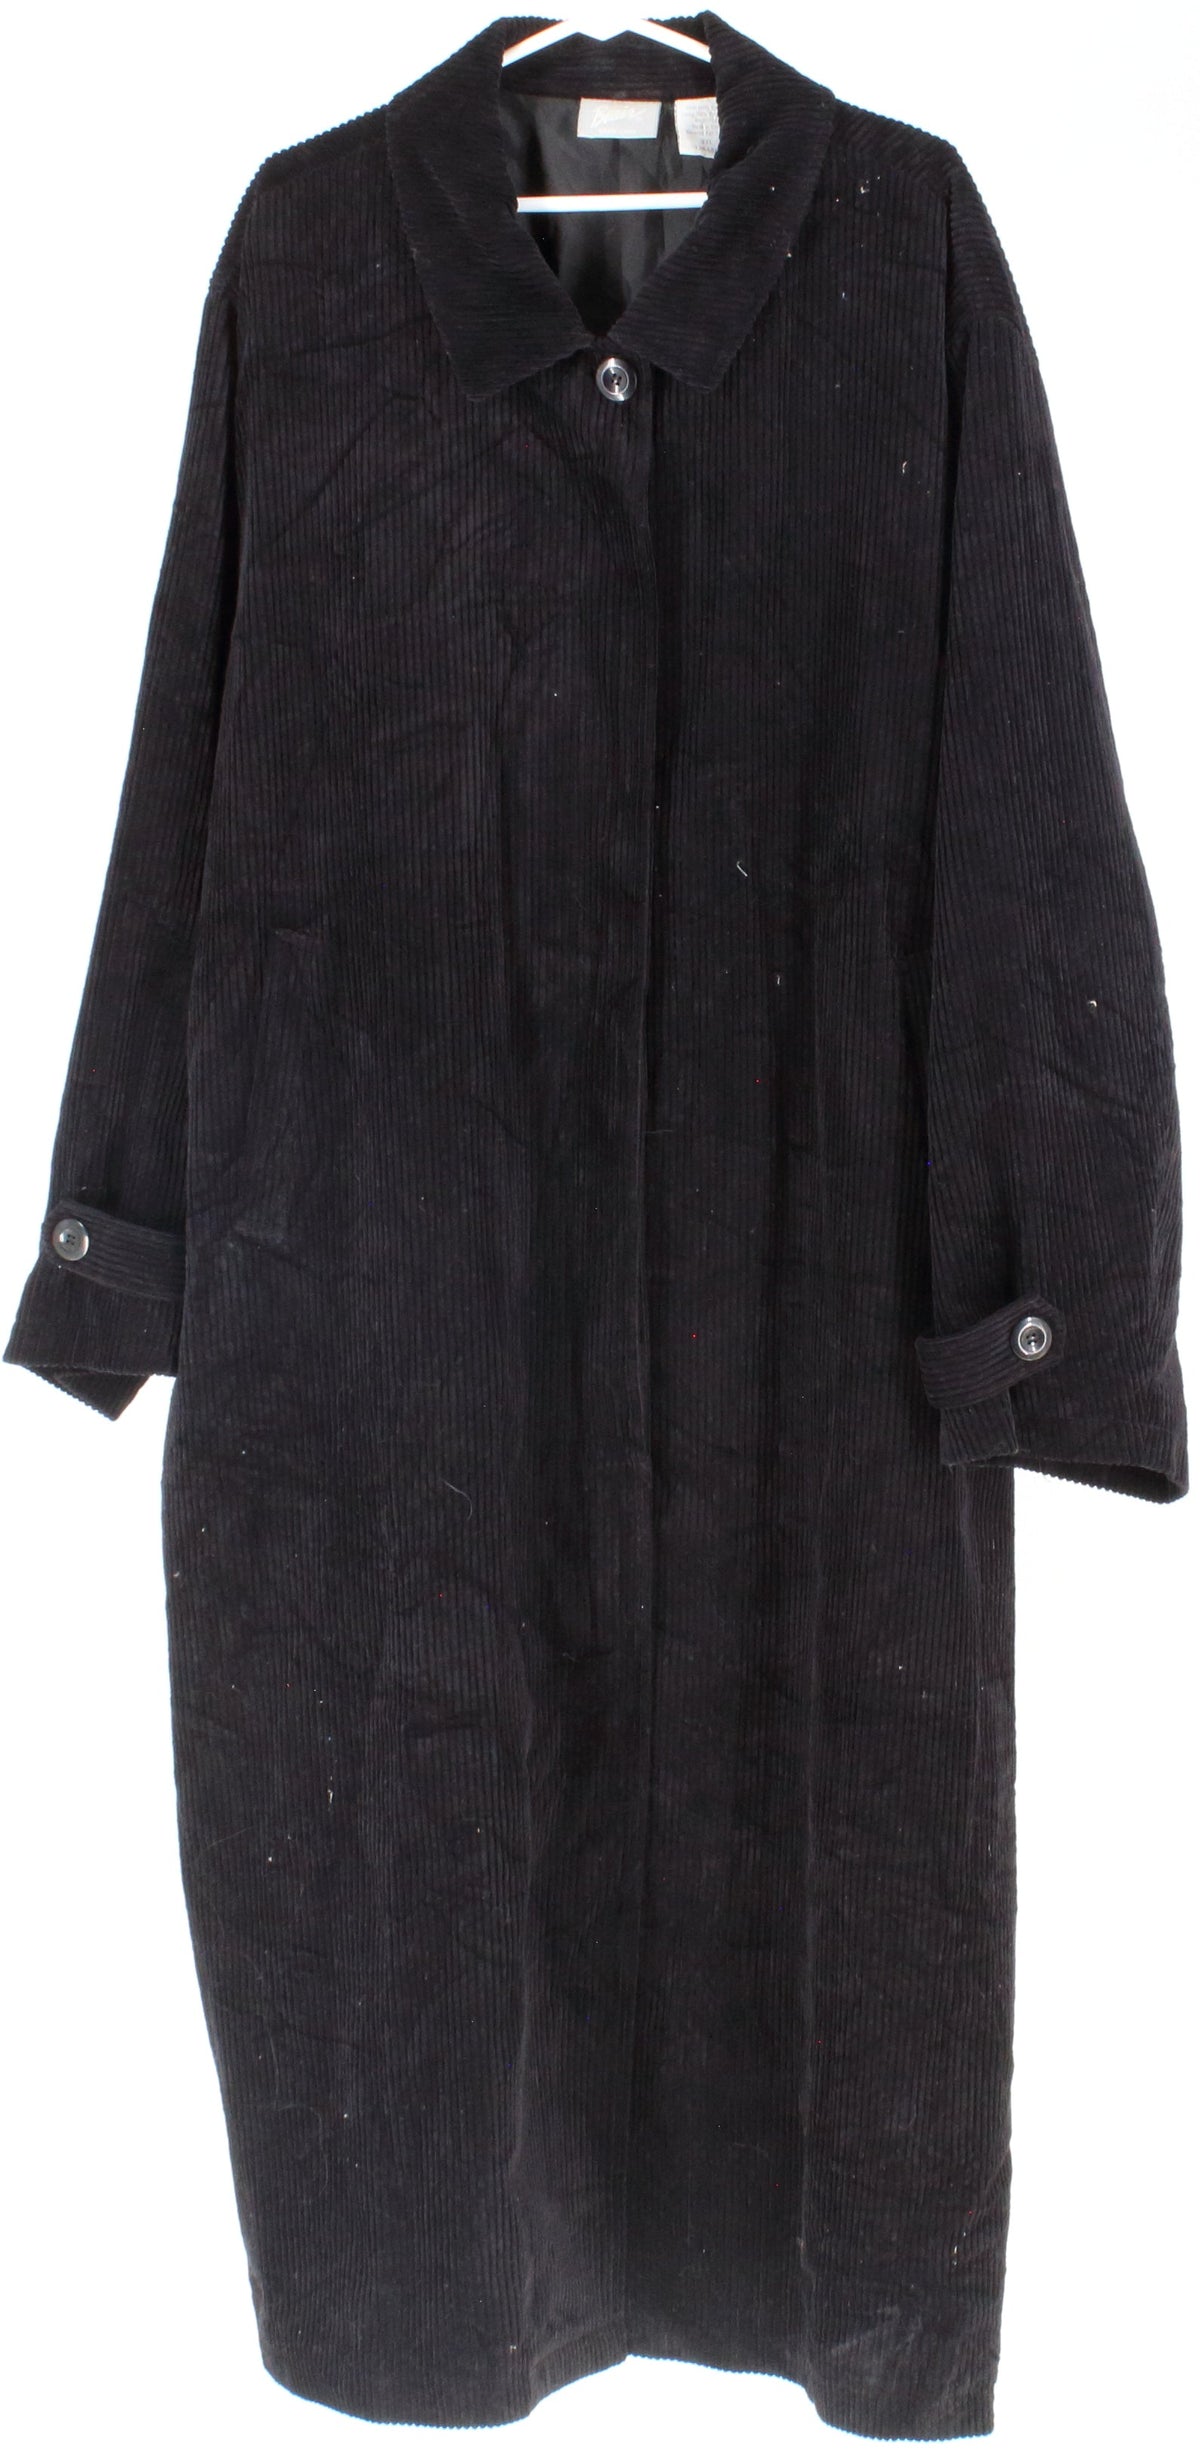 Blair Black Corduroy Women's Coat